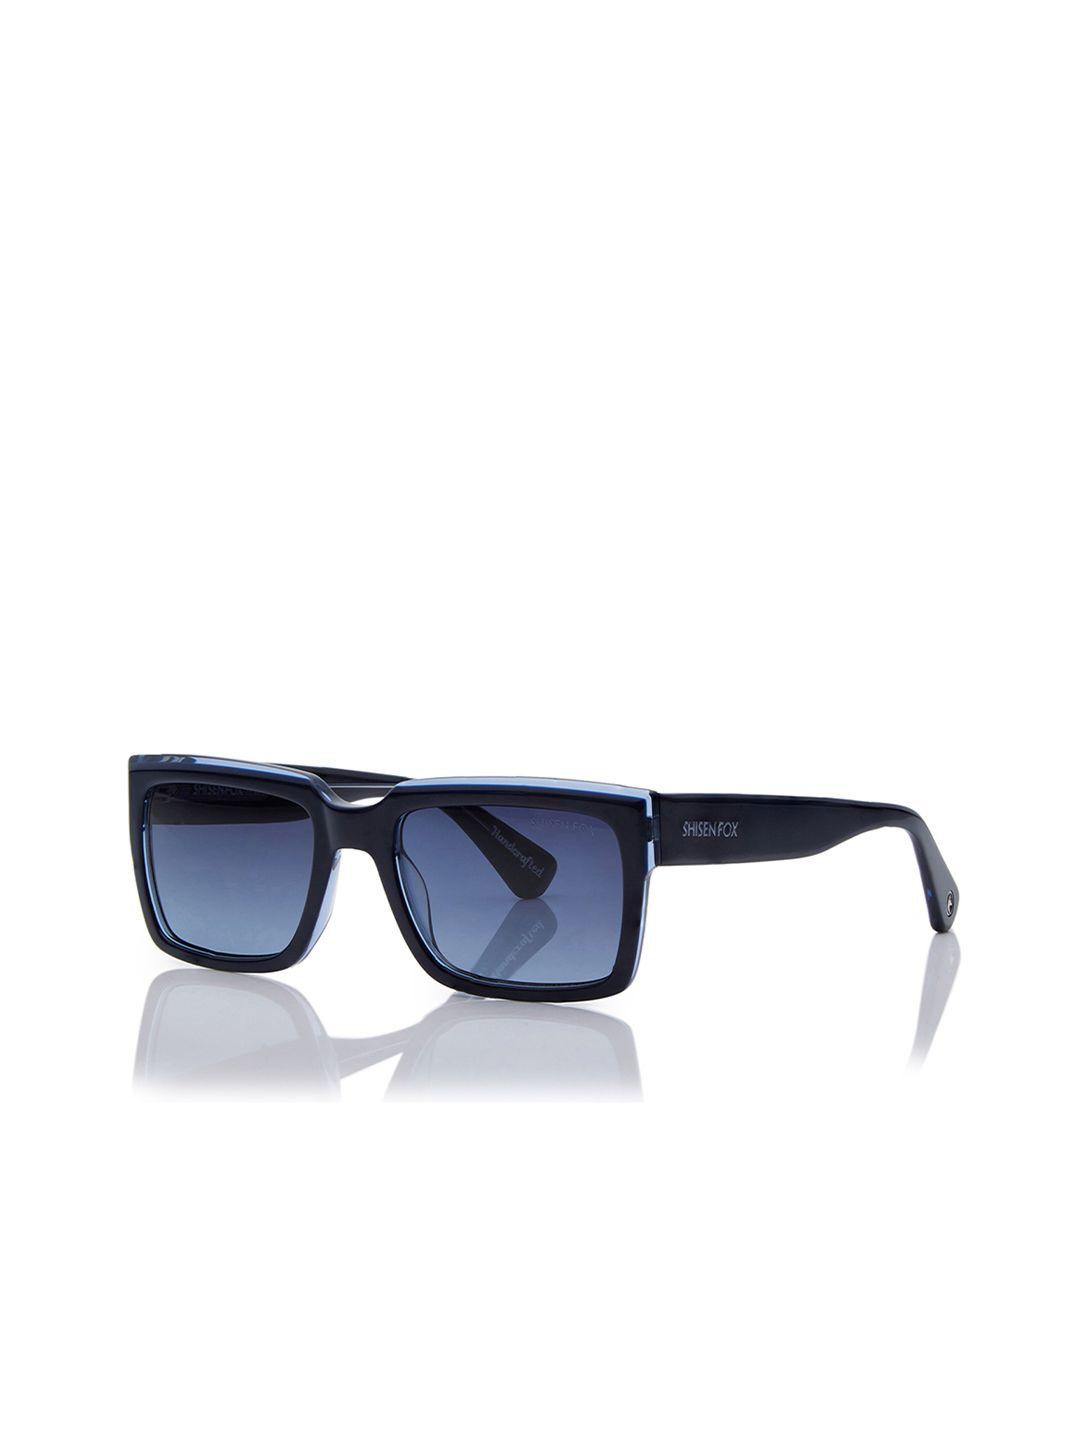 shisen fox unisex square sunglasses with uv protected lens